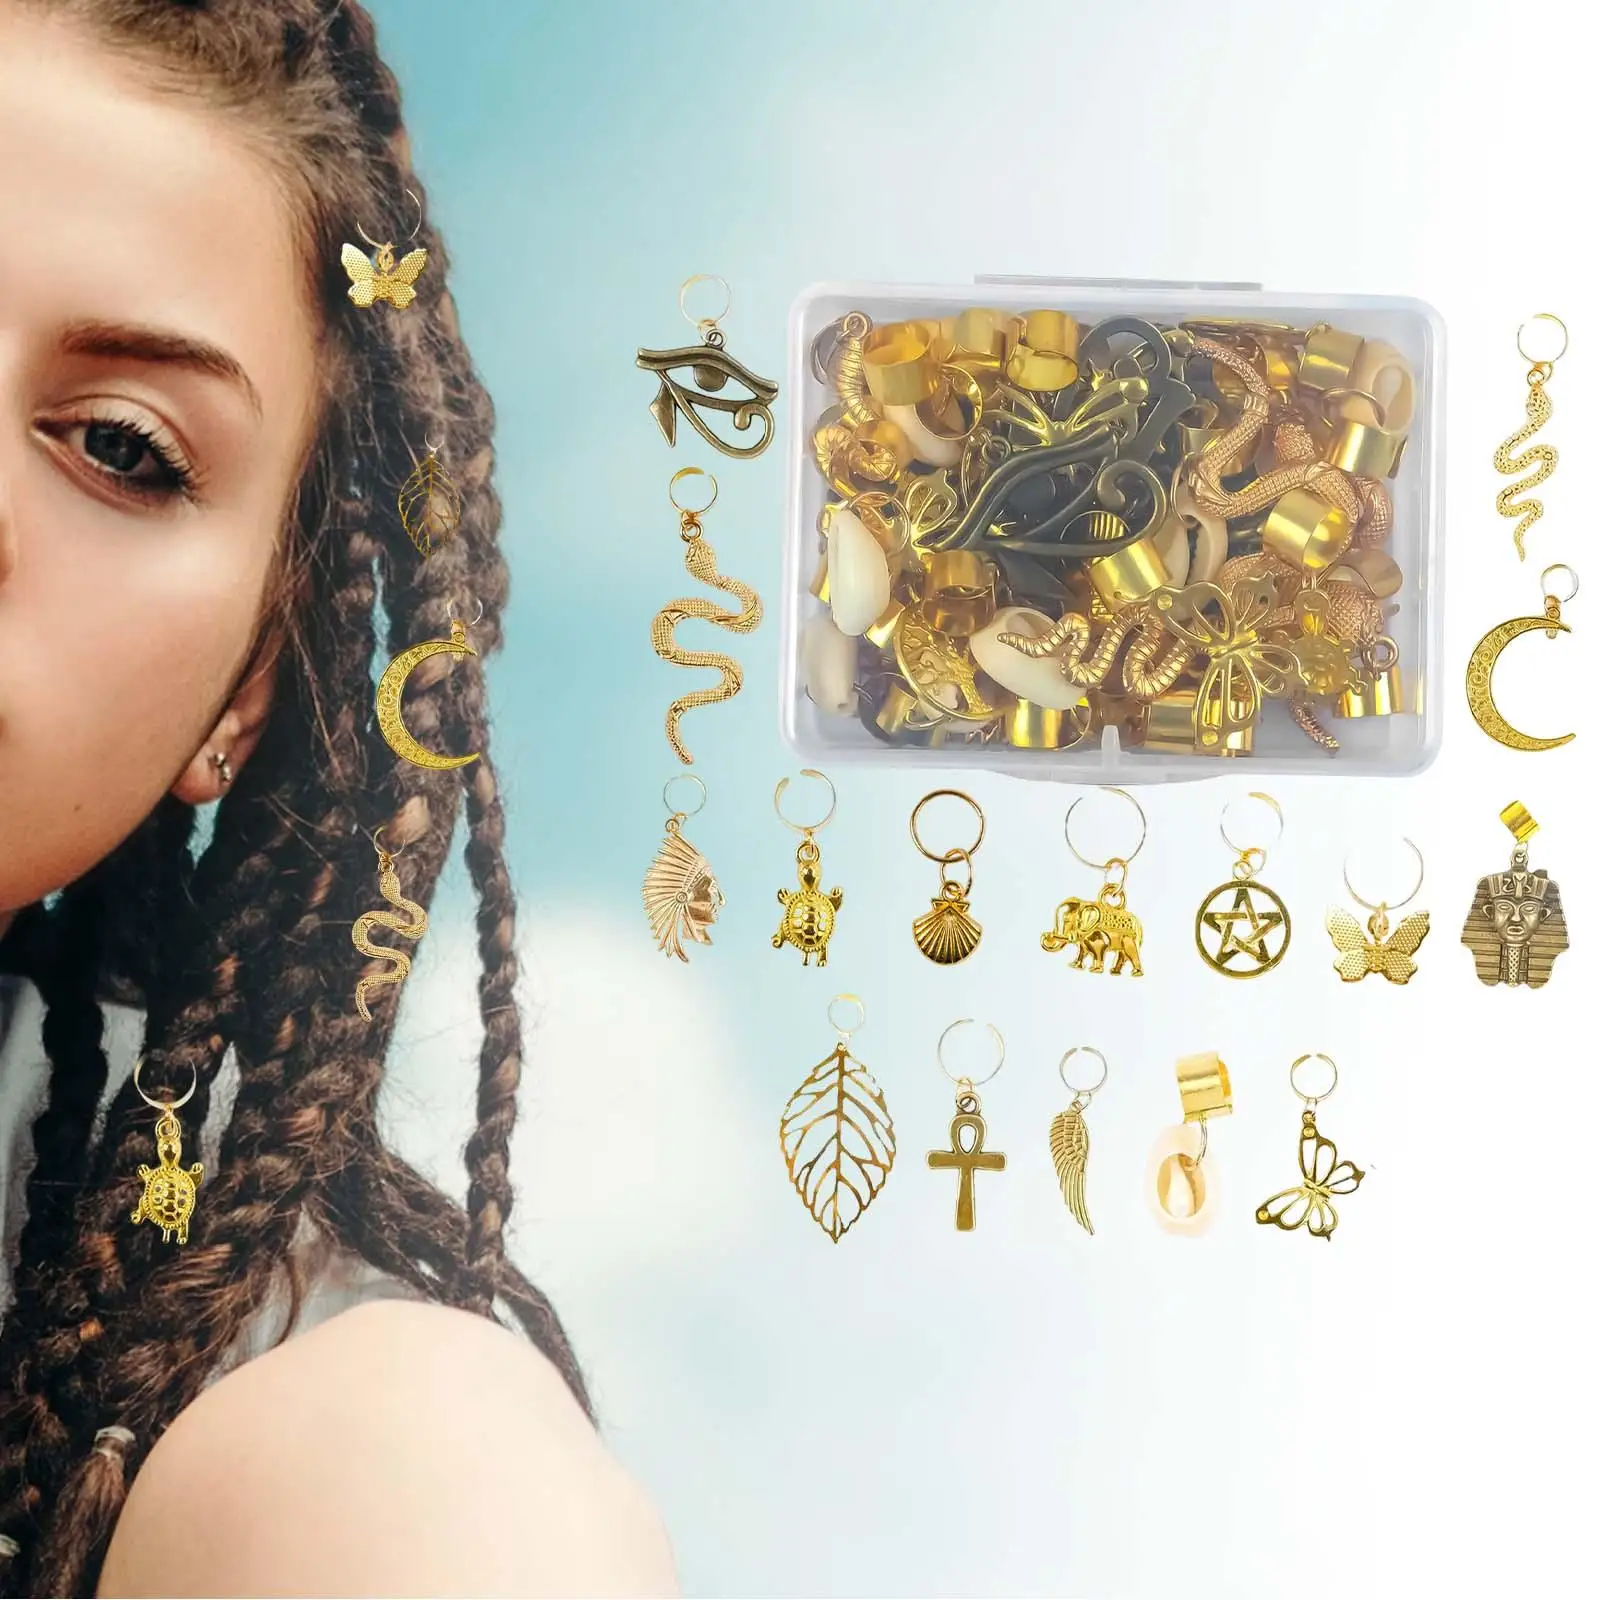 40 Pieces Multicolor jewelry Hair Accessories Decoration Flexible Reusable Alloy Braiding Coils for Fashion Show Party